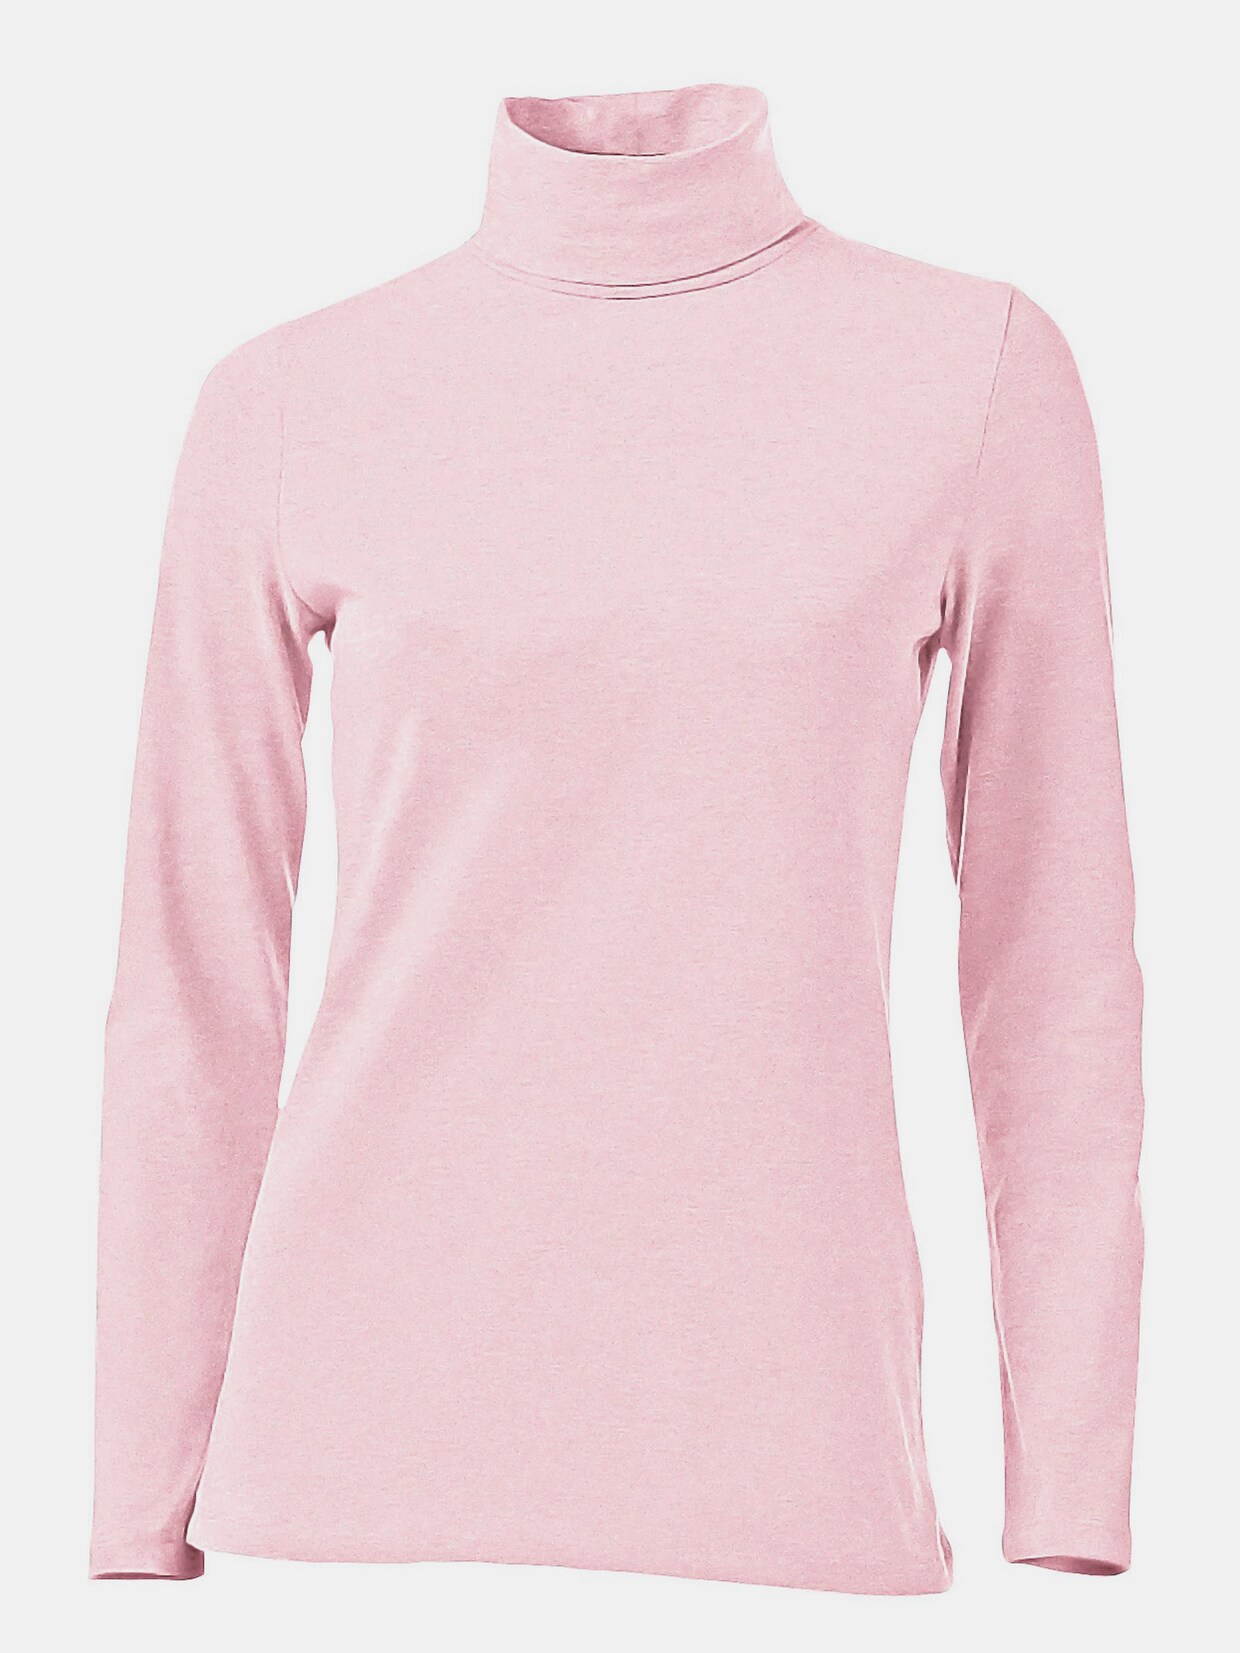 Best Connections Rollkragen-Shirt - rosé